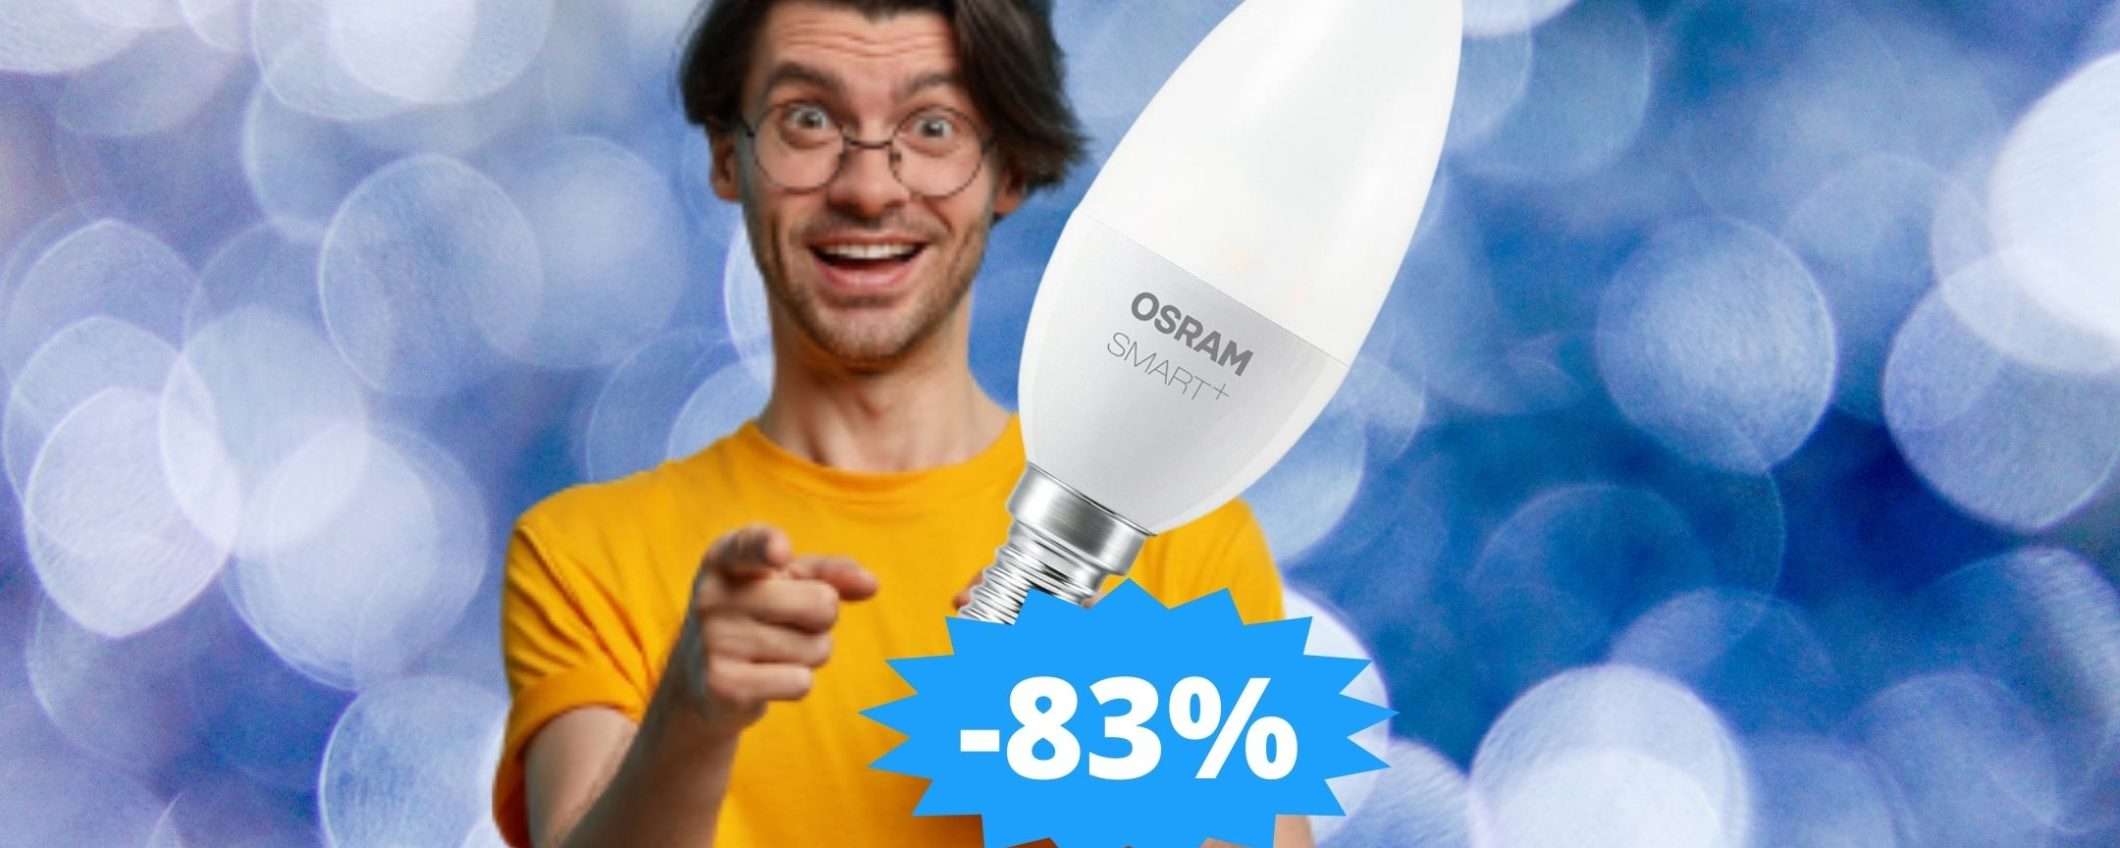 Lampadina LED Osram Smart+: prezzo BOMBA su Amazon (-83%)